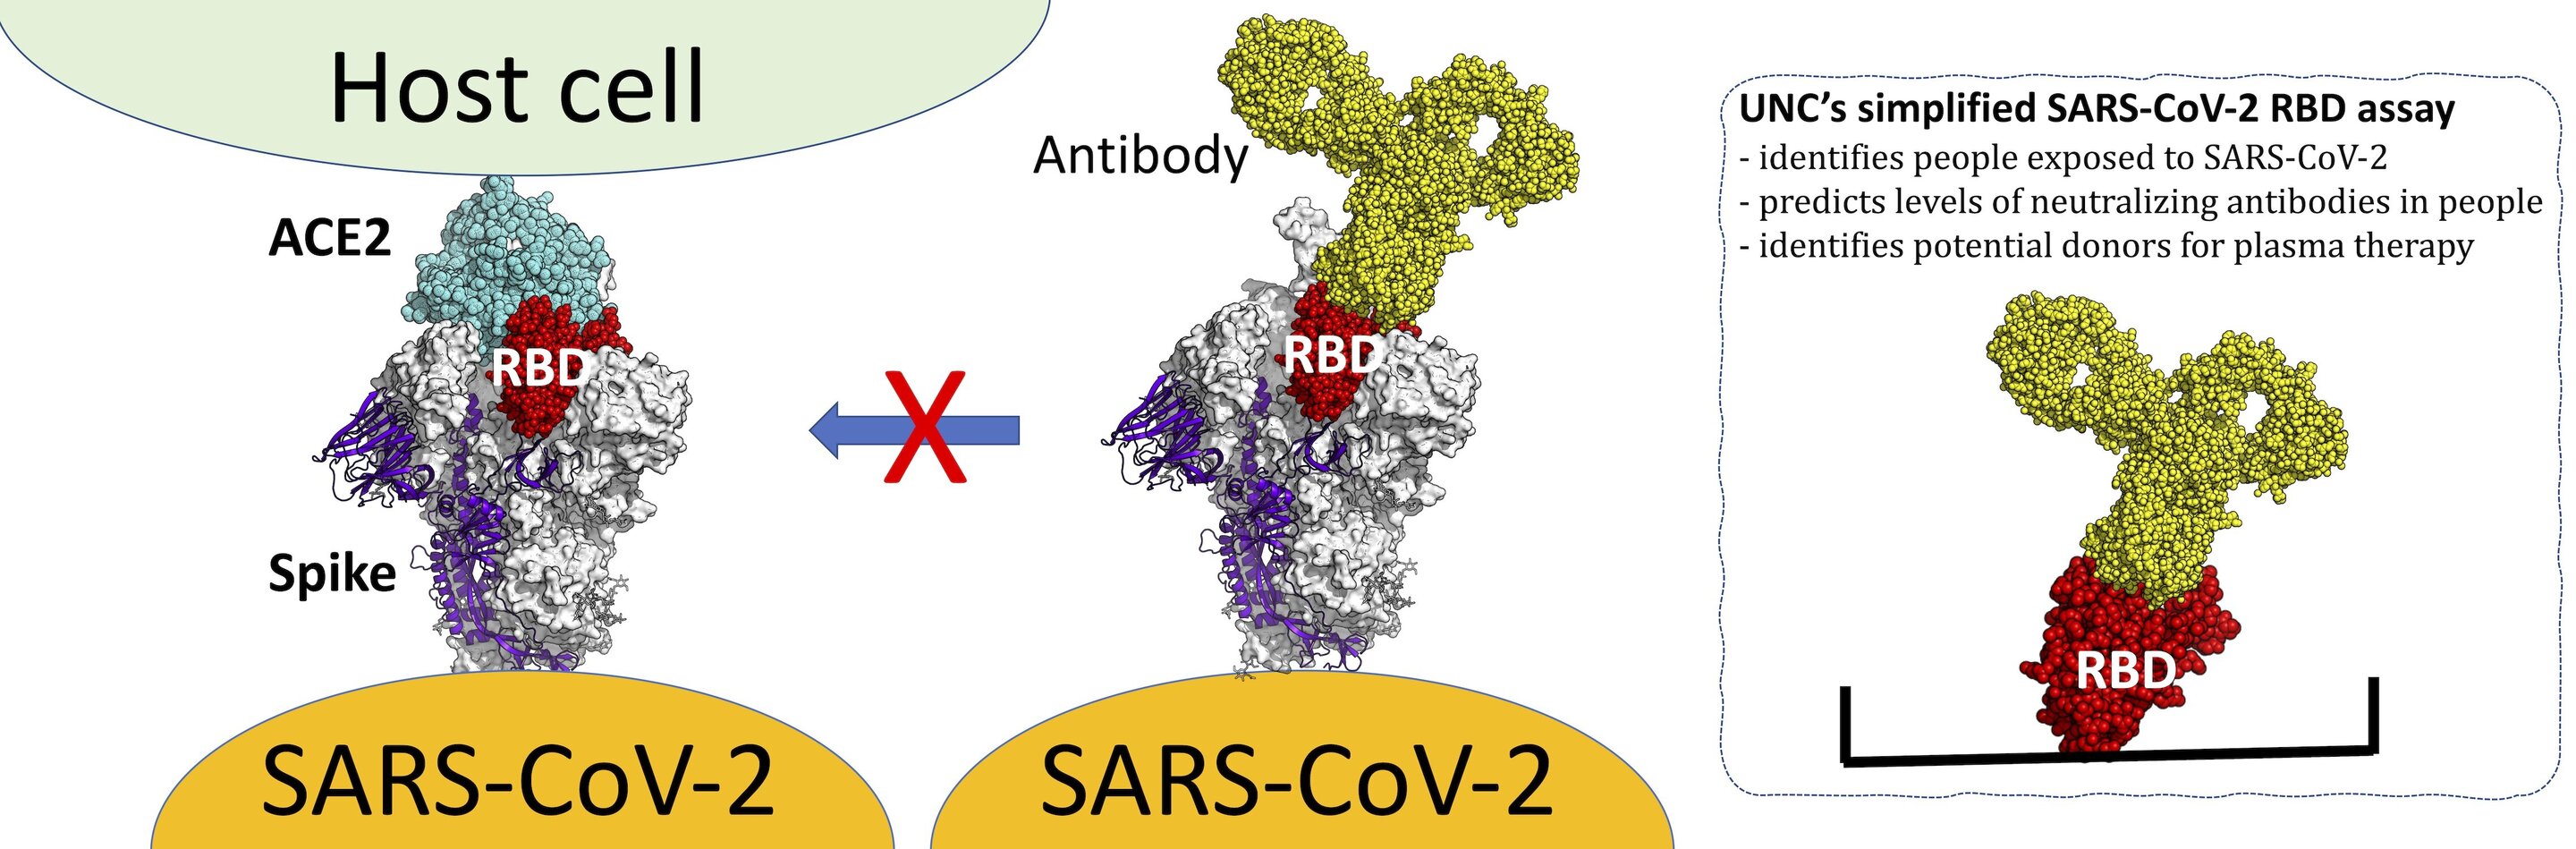 Rbd домену. Коронавирус SARS-cov2,АТ IGG К RBD домену s-белка. Антитела к белку SARS cov 2. Антитела к RBD домену спайкового белка SARS-cov-2. Антитела к RBD домену спайкового (s) белка SARSCOV-2, IGG (колич.).